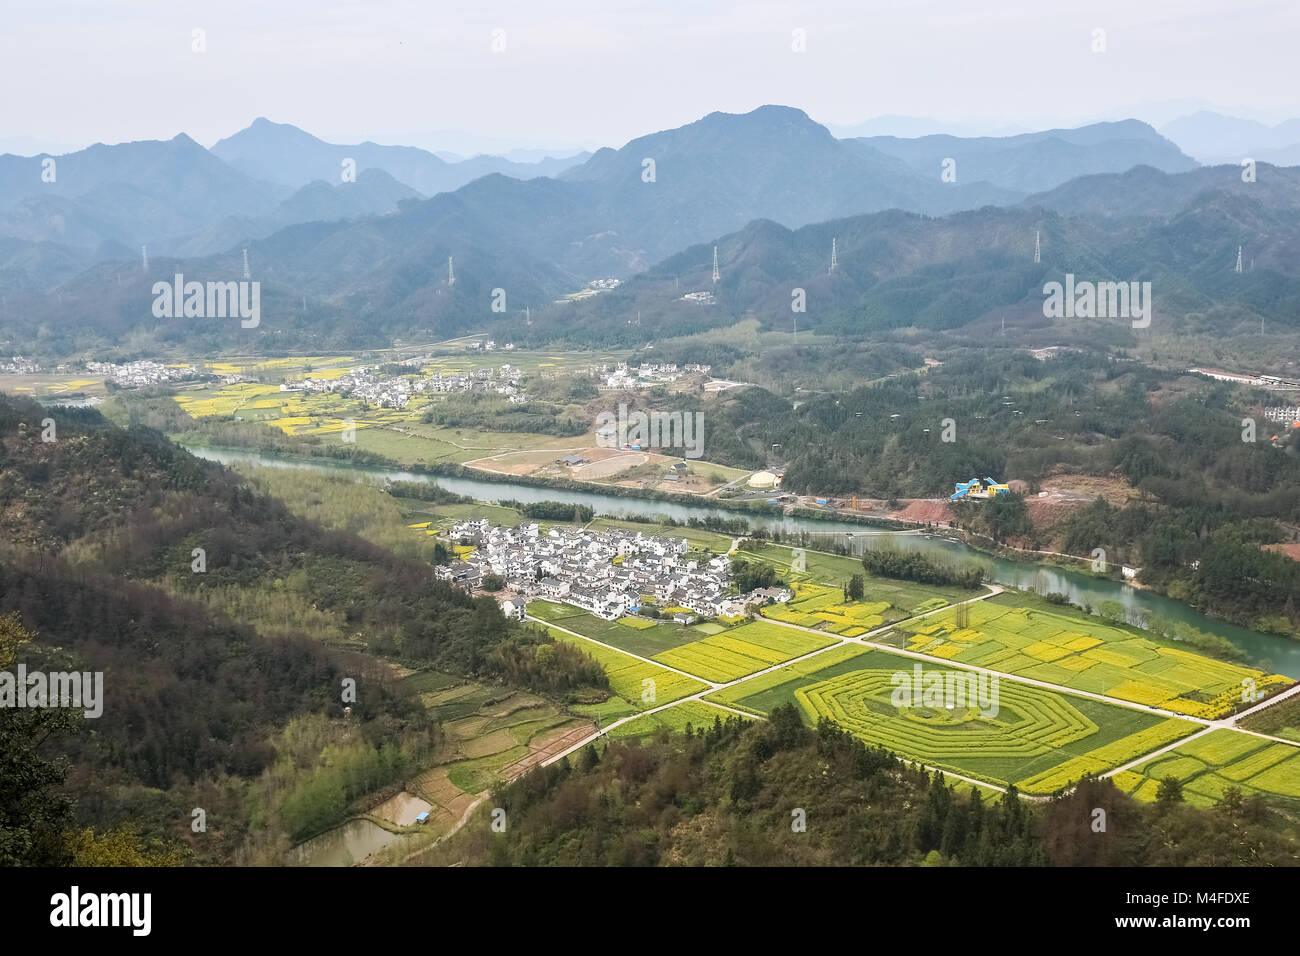 qiyun mountain landscape Stock Photo